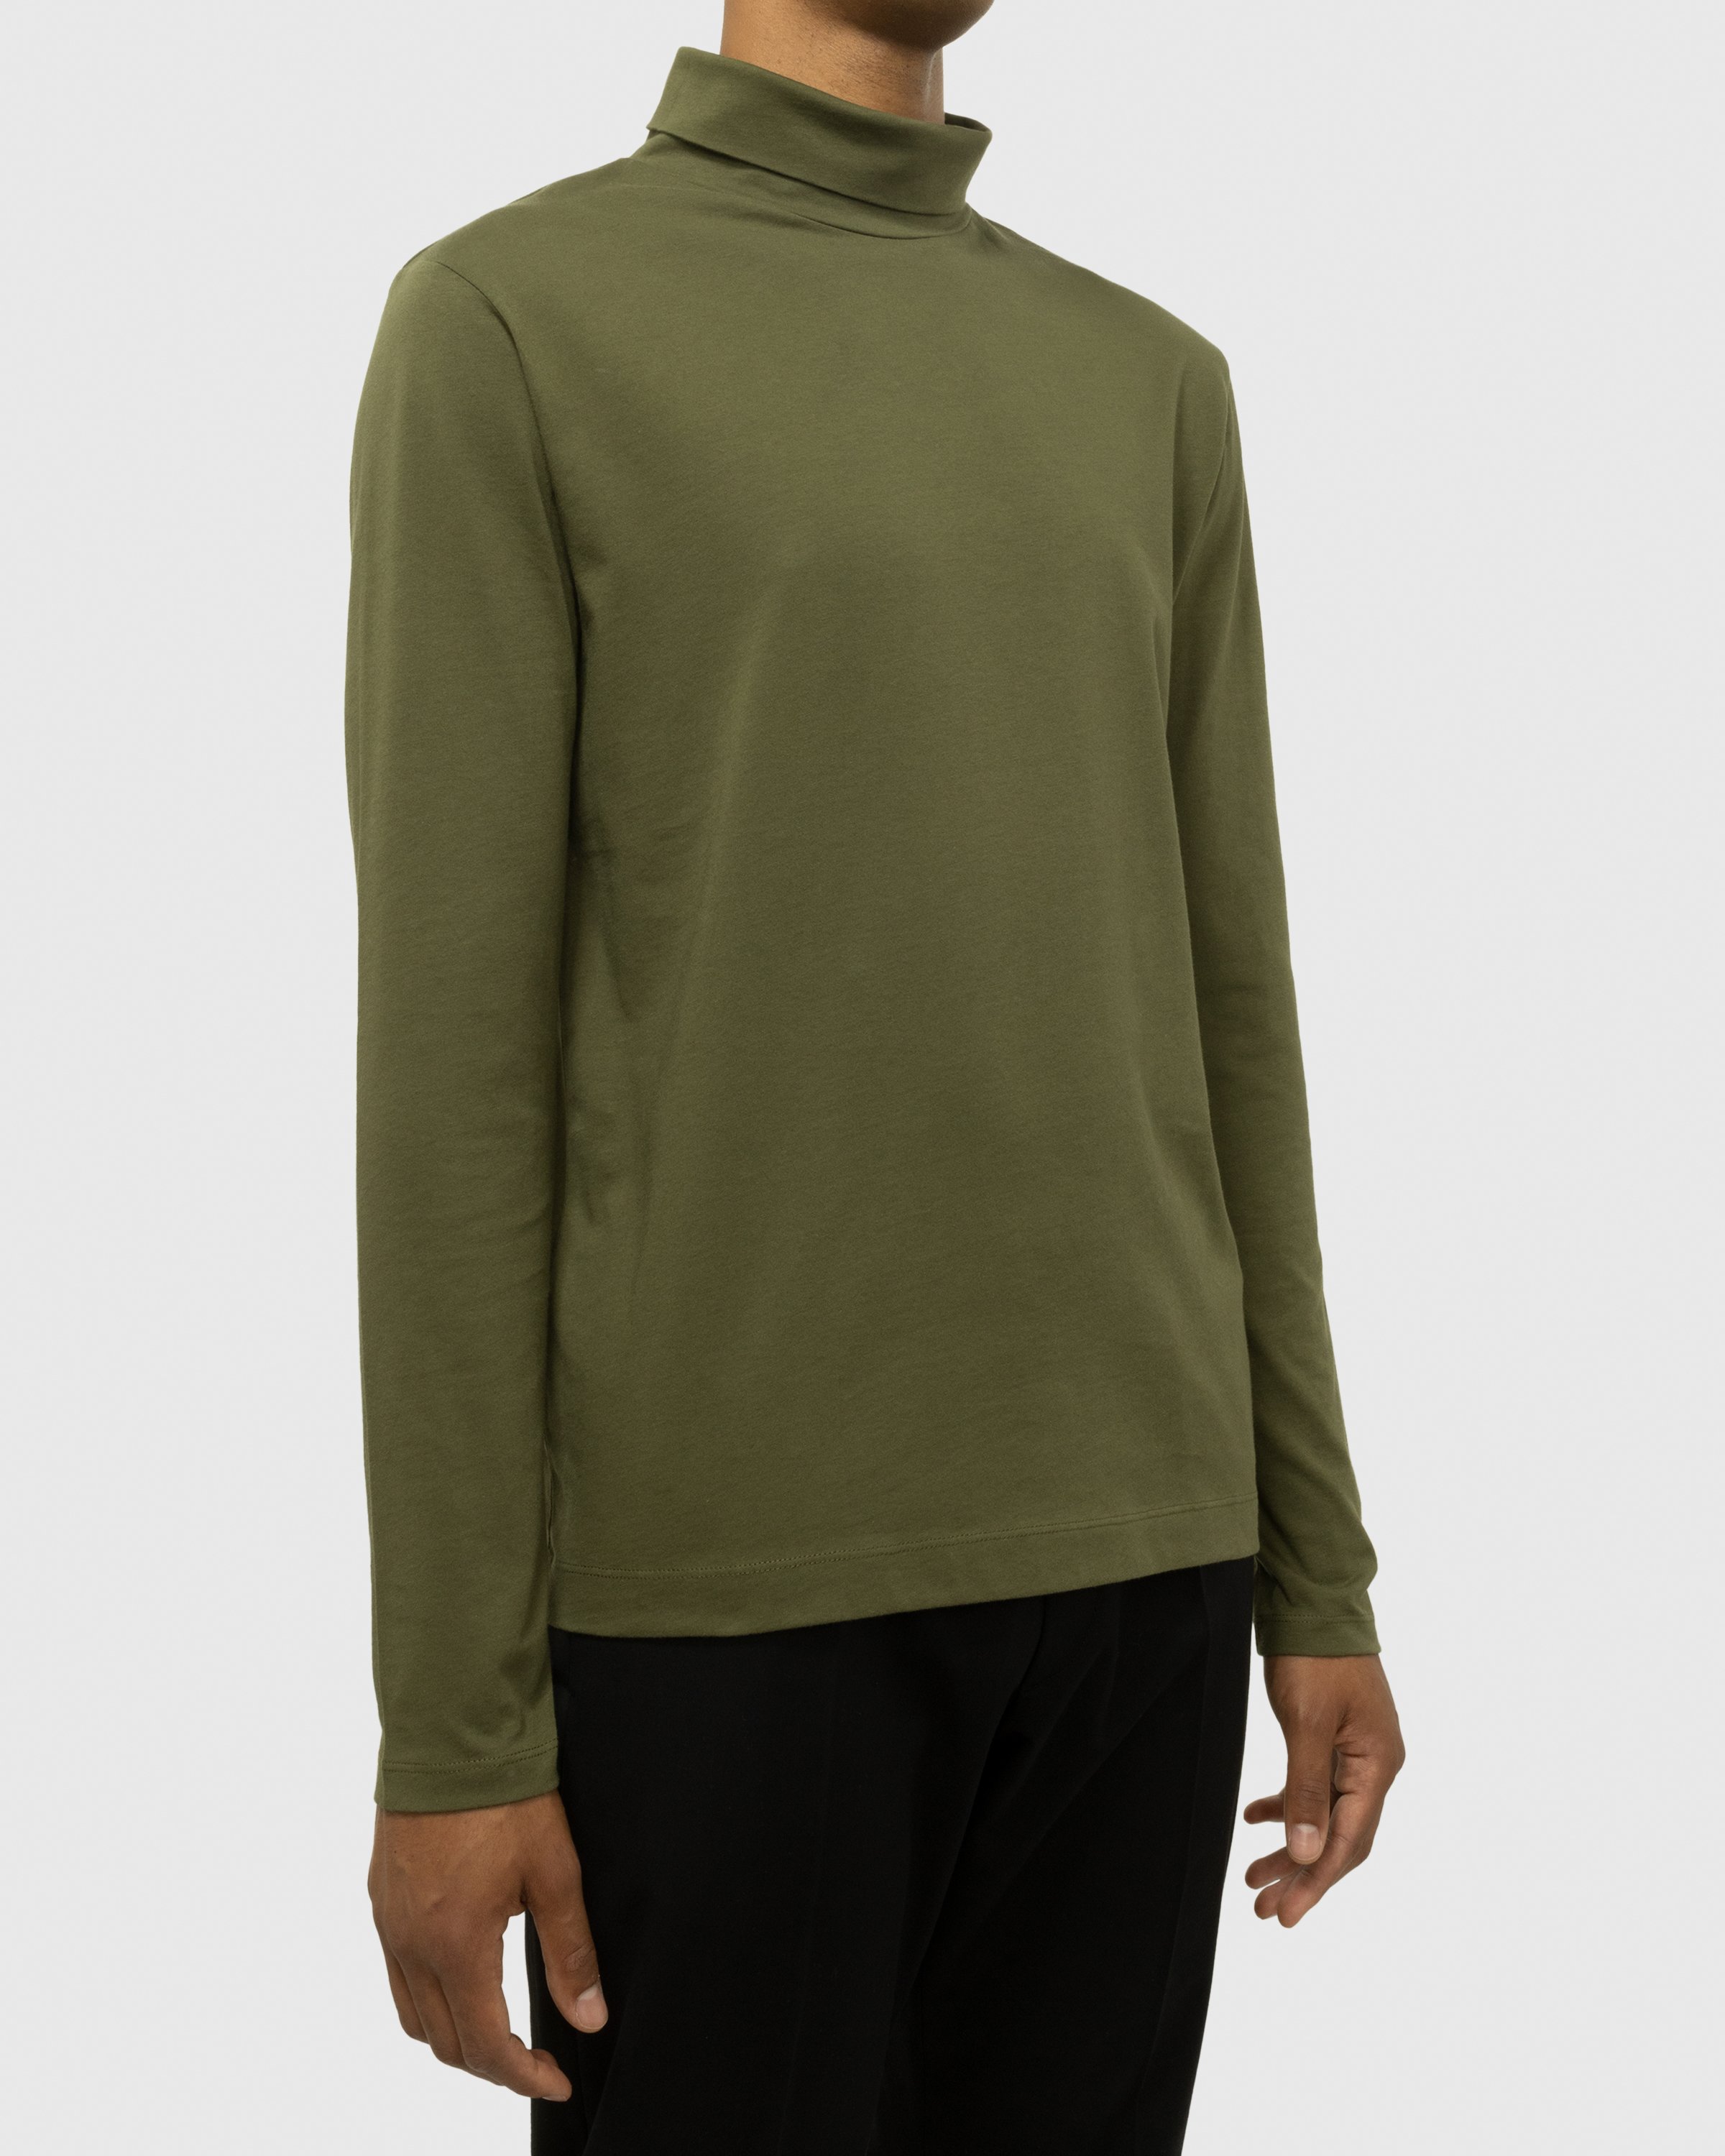 Dries van Noten - Heyzo Turtleneck Jersey Shirt Green - Clothing - Green - Image 3